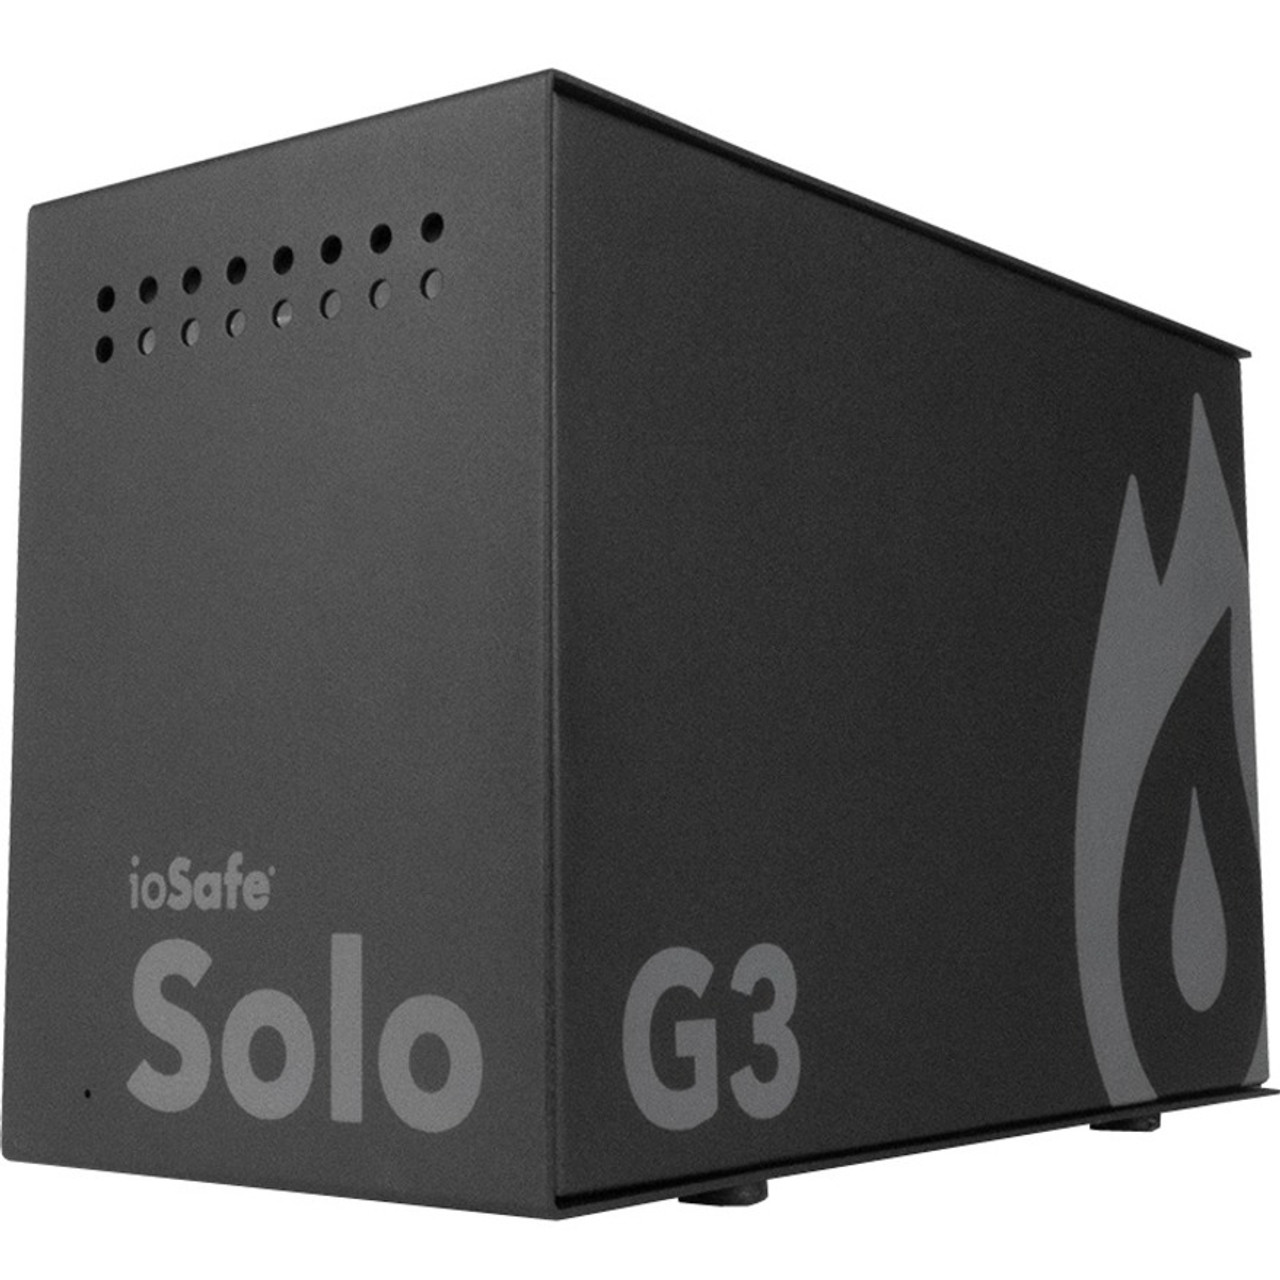 ioSafe Solo G3 Black Edition 4 TB Desktop Hard Drive - External - Black - 71300-1238-1200